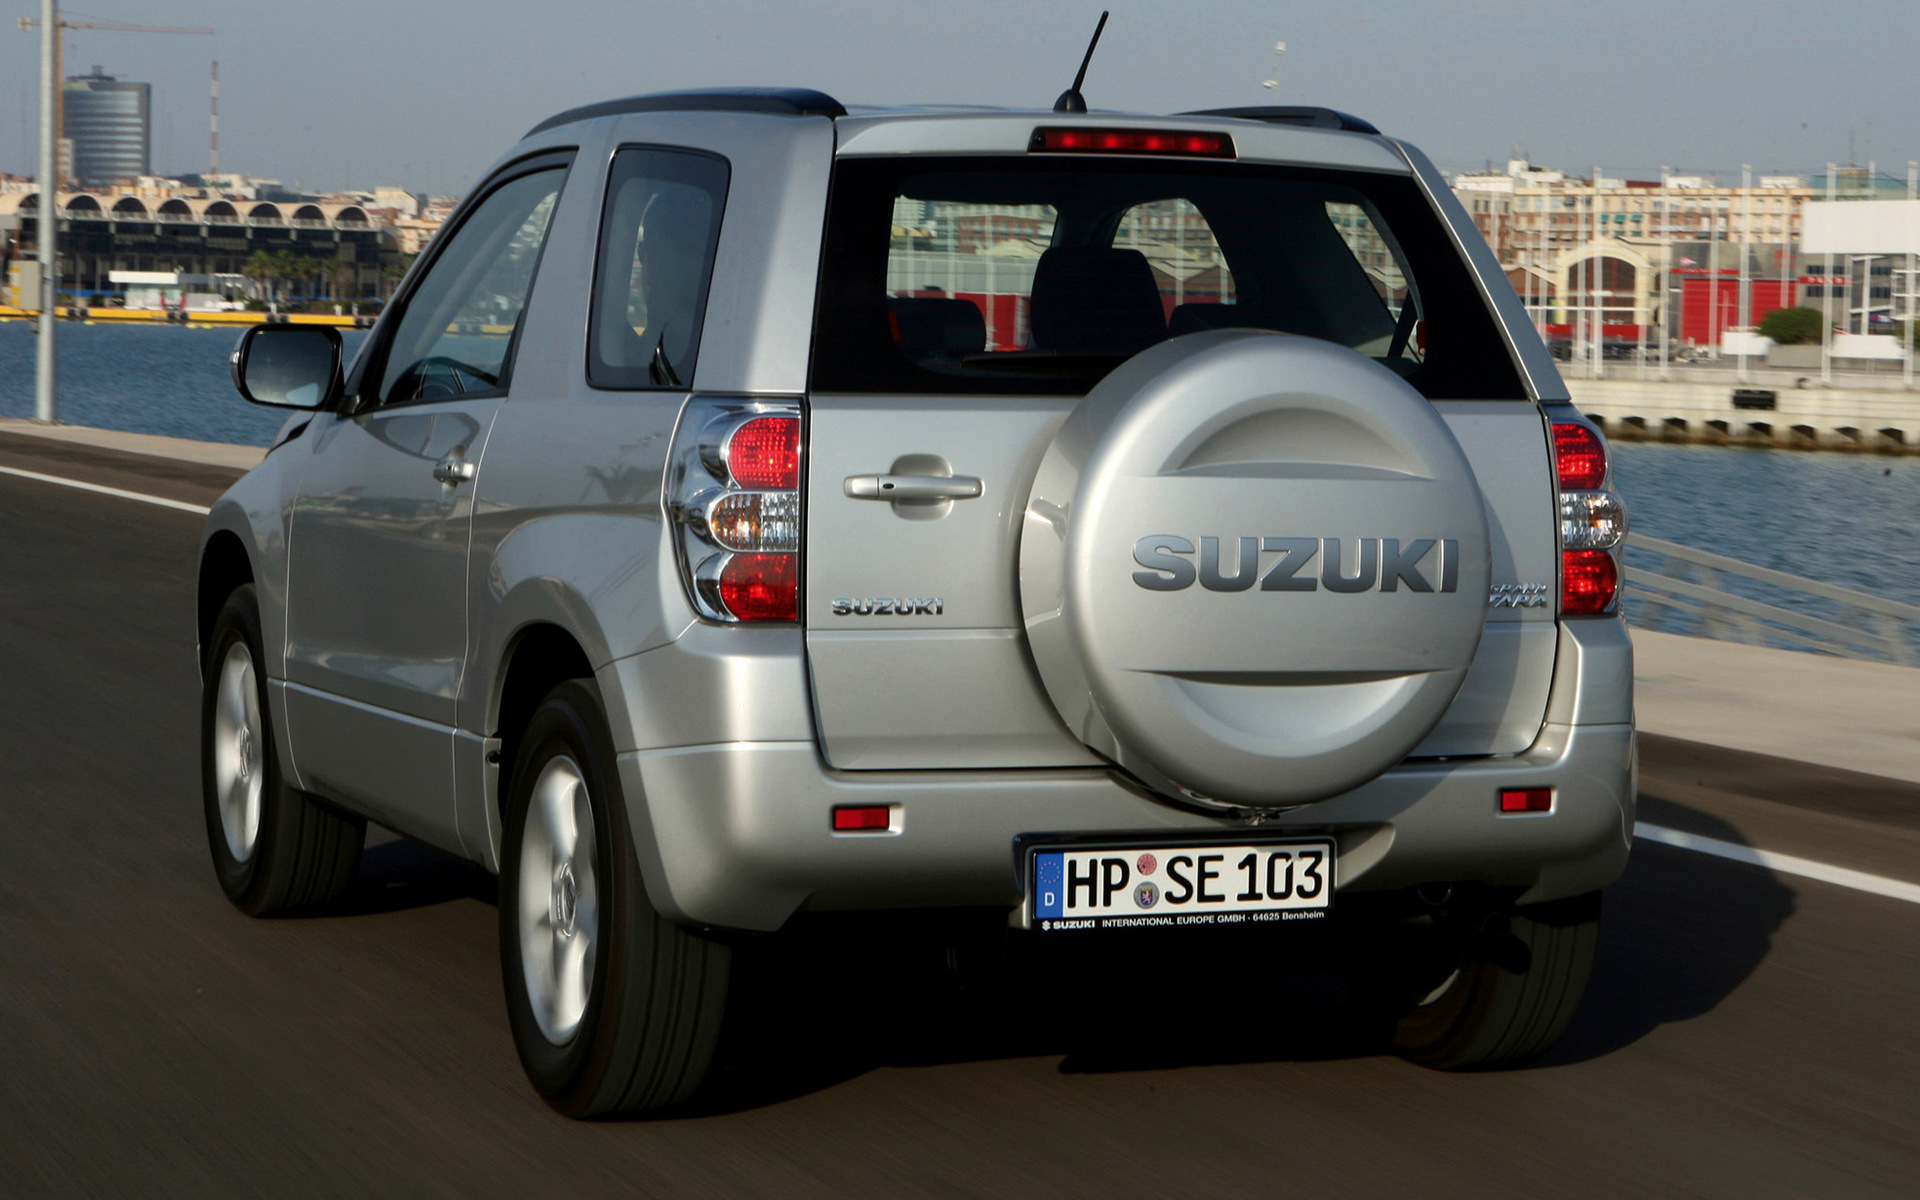 2008 Suzuki Grand Vitara 3 door Wallpapers and HD Images 